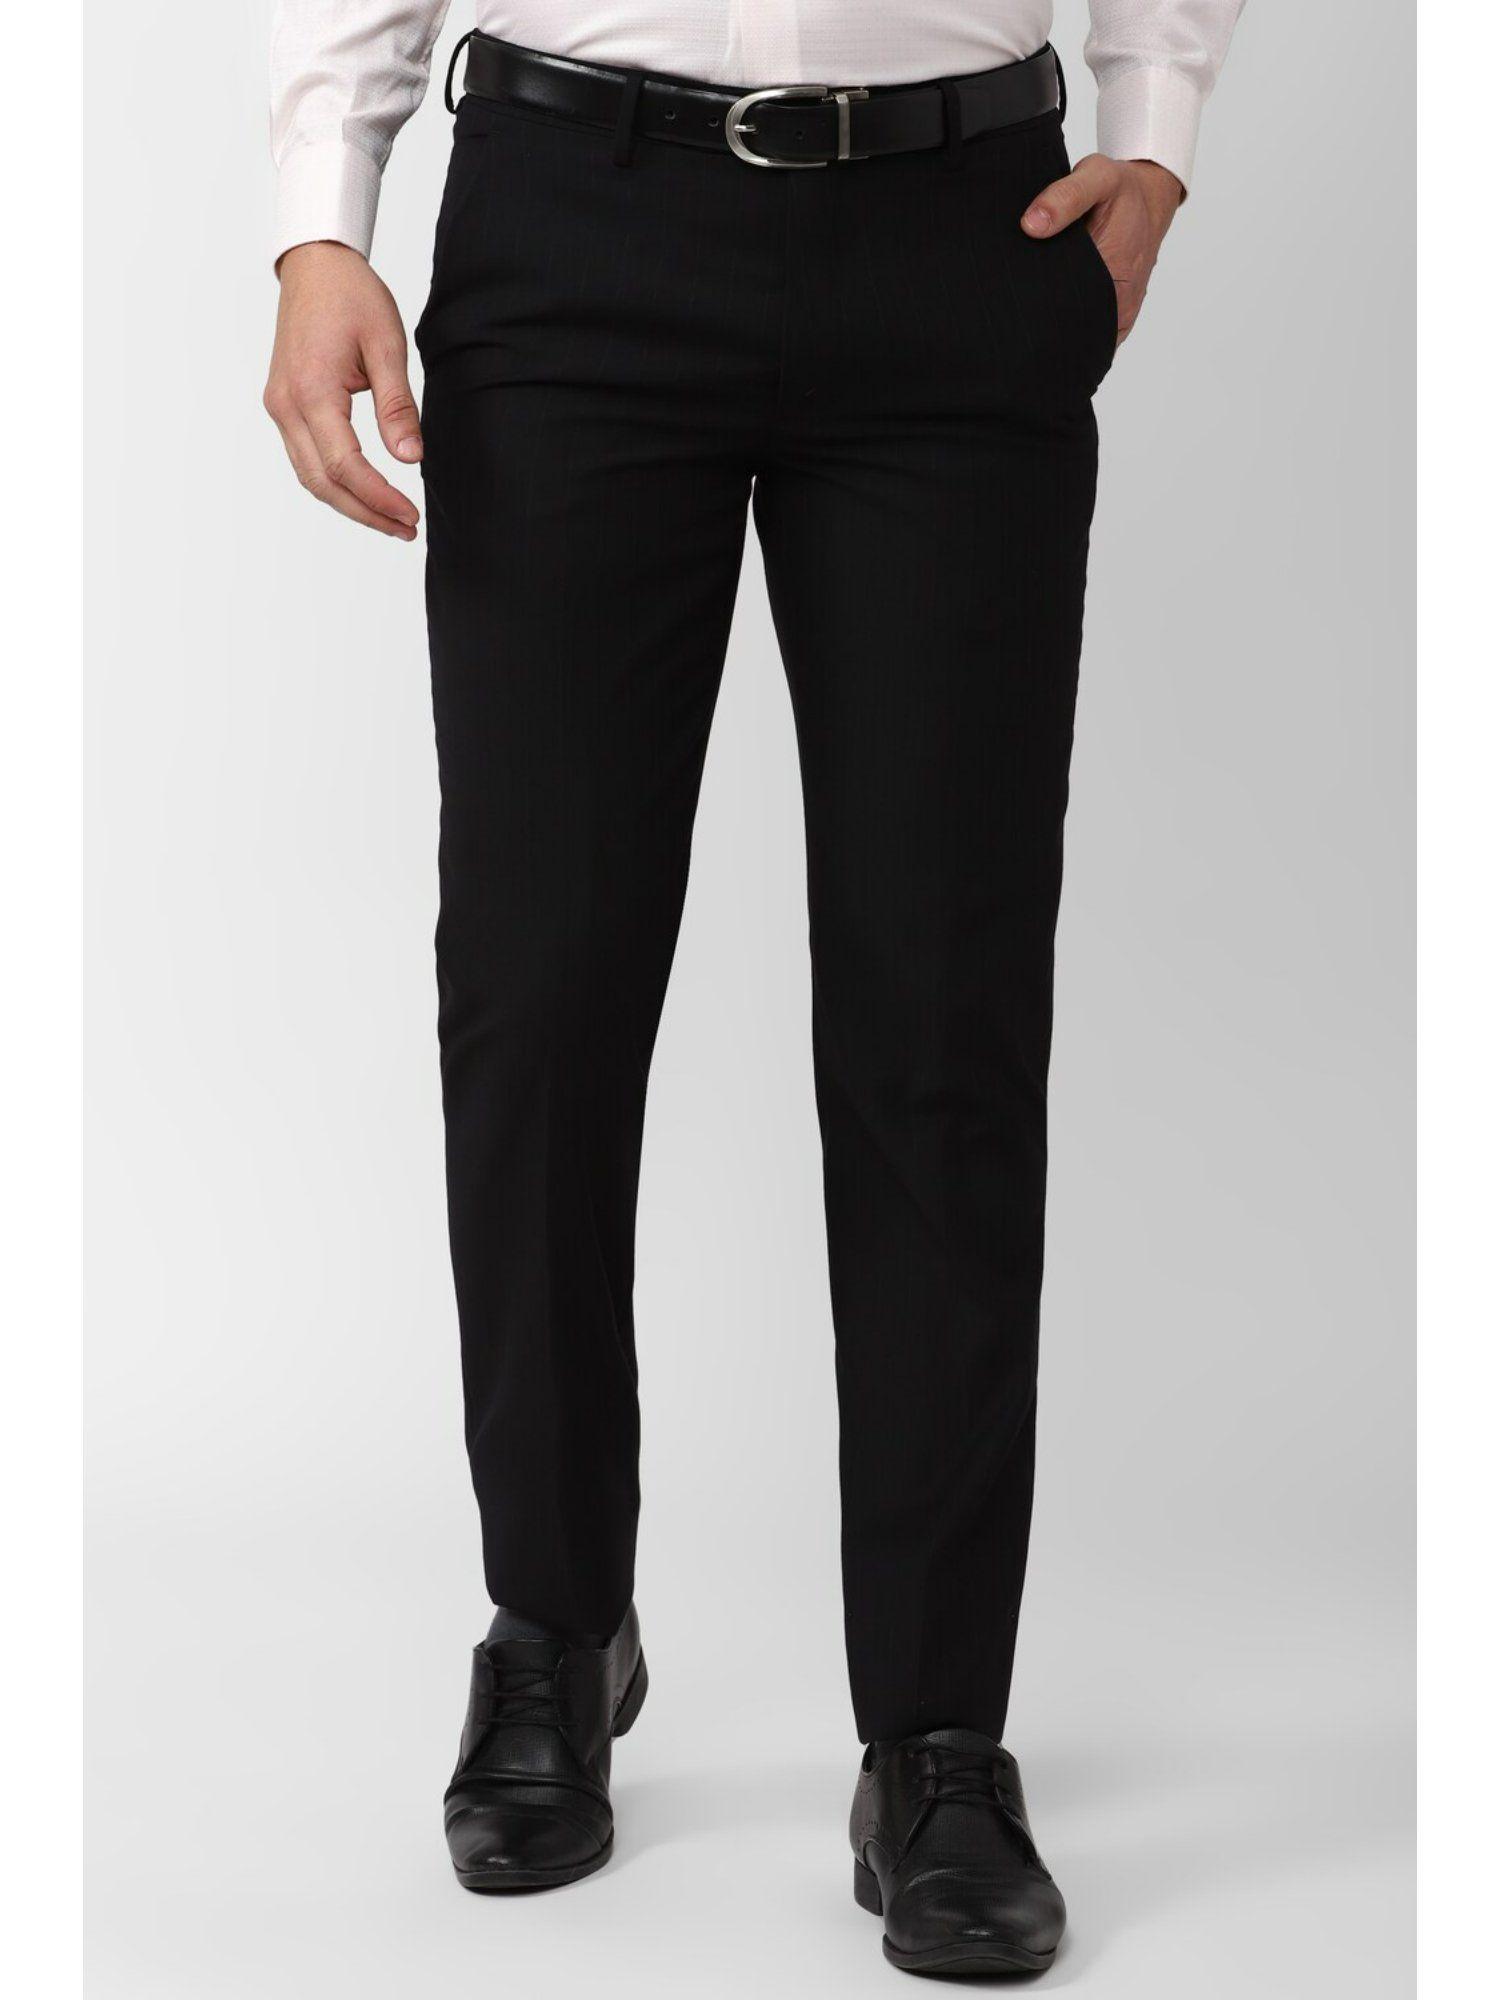 men-black-stripes-slim-fit-trousers